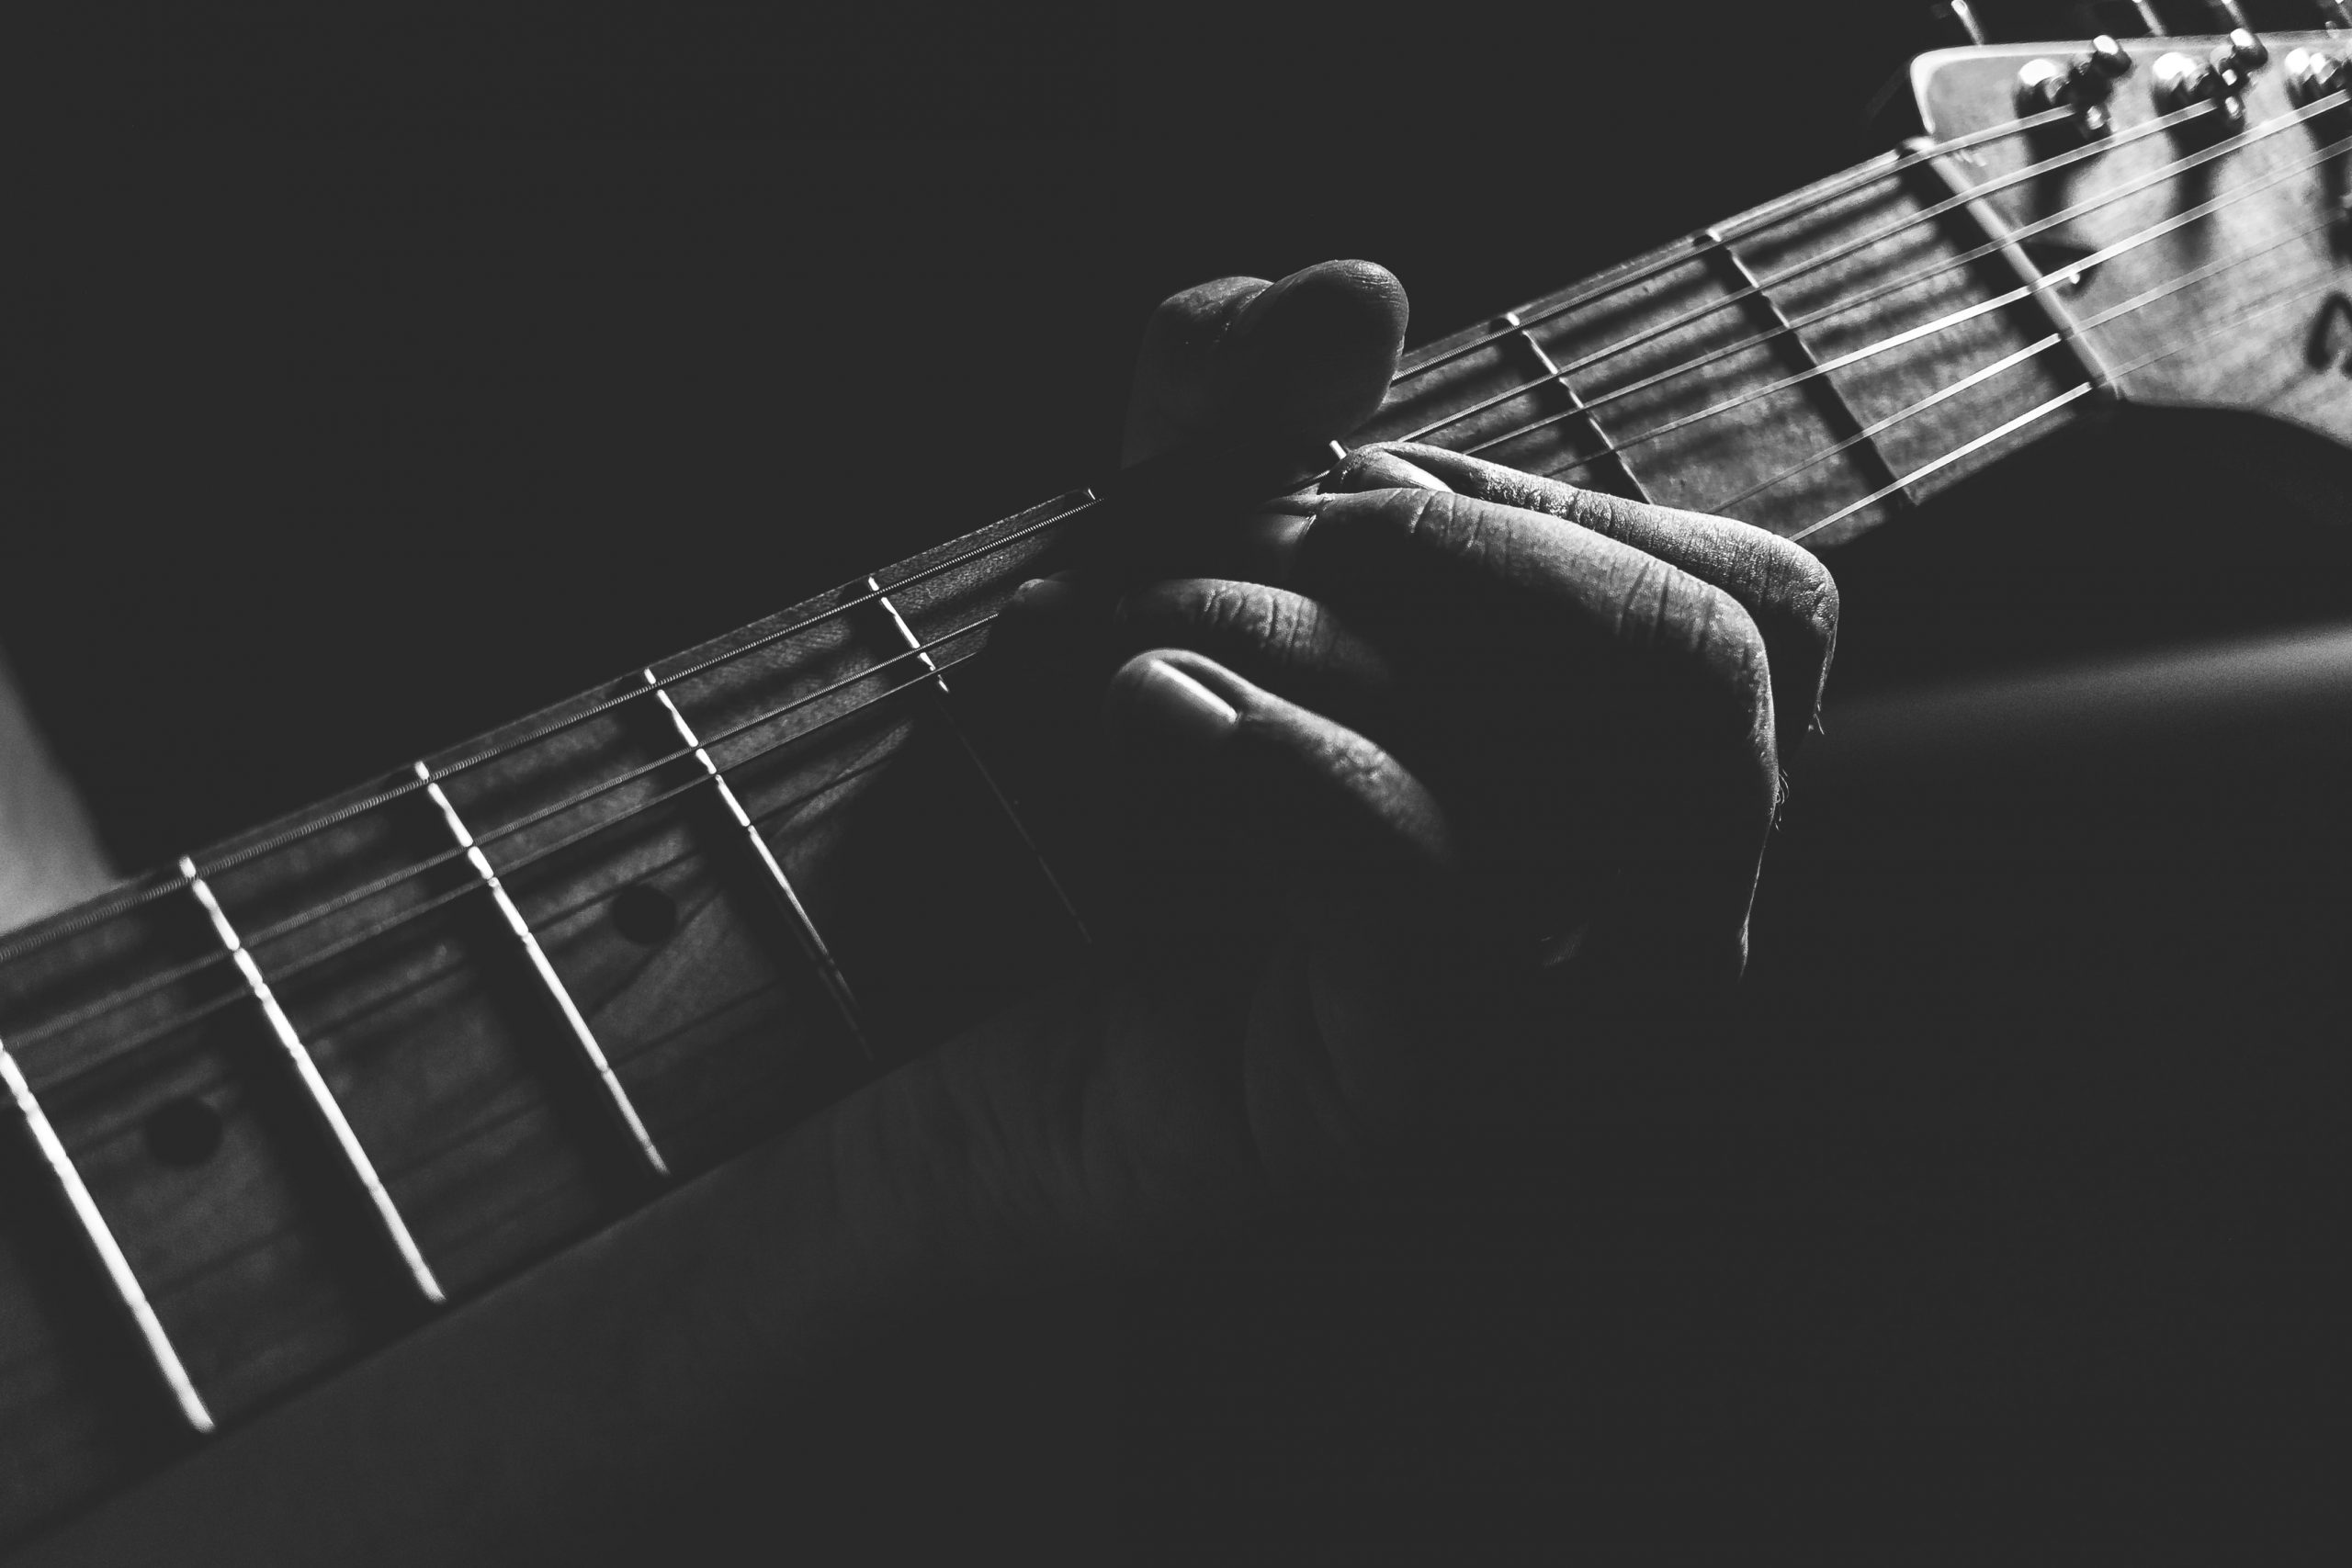 Grayscale closeup of guitar strings